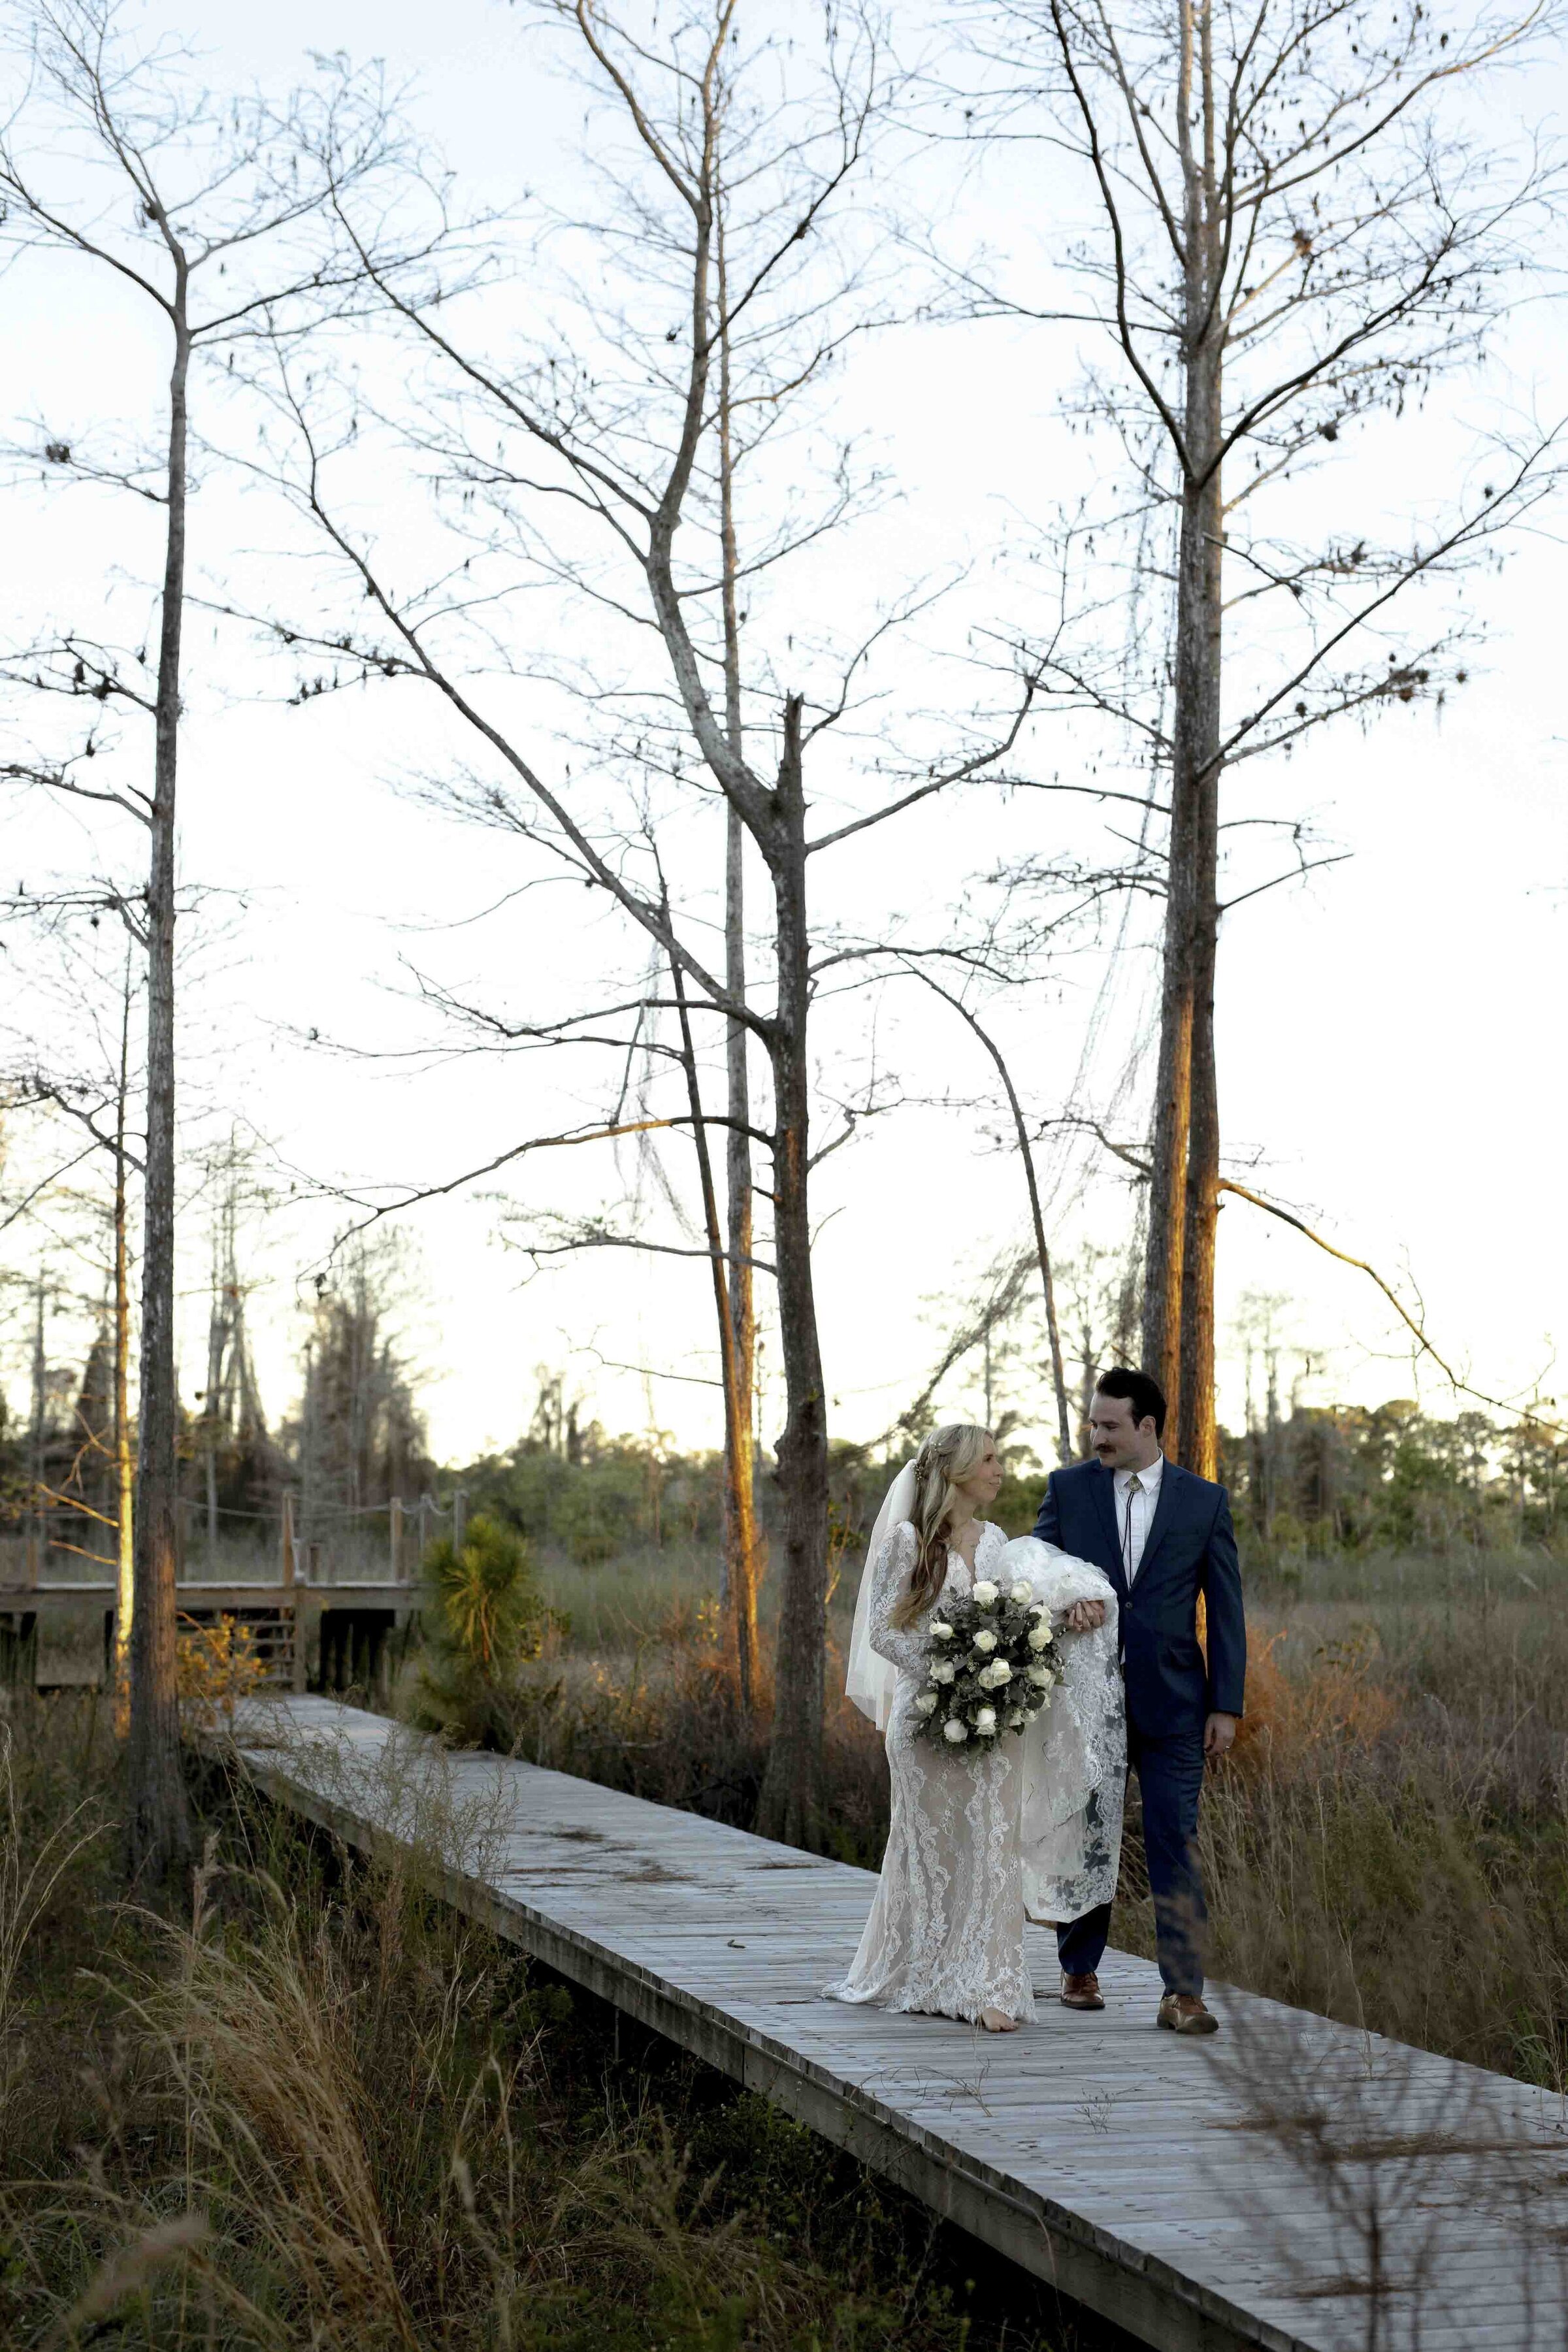 Bride and groom walking on a bridge